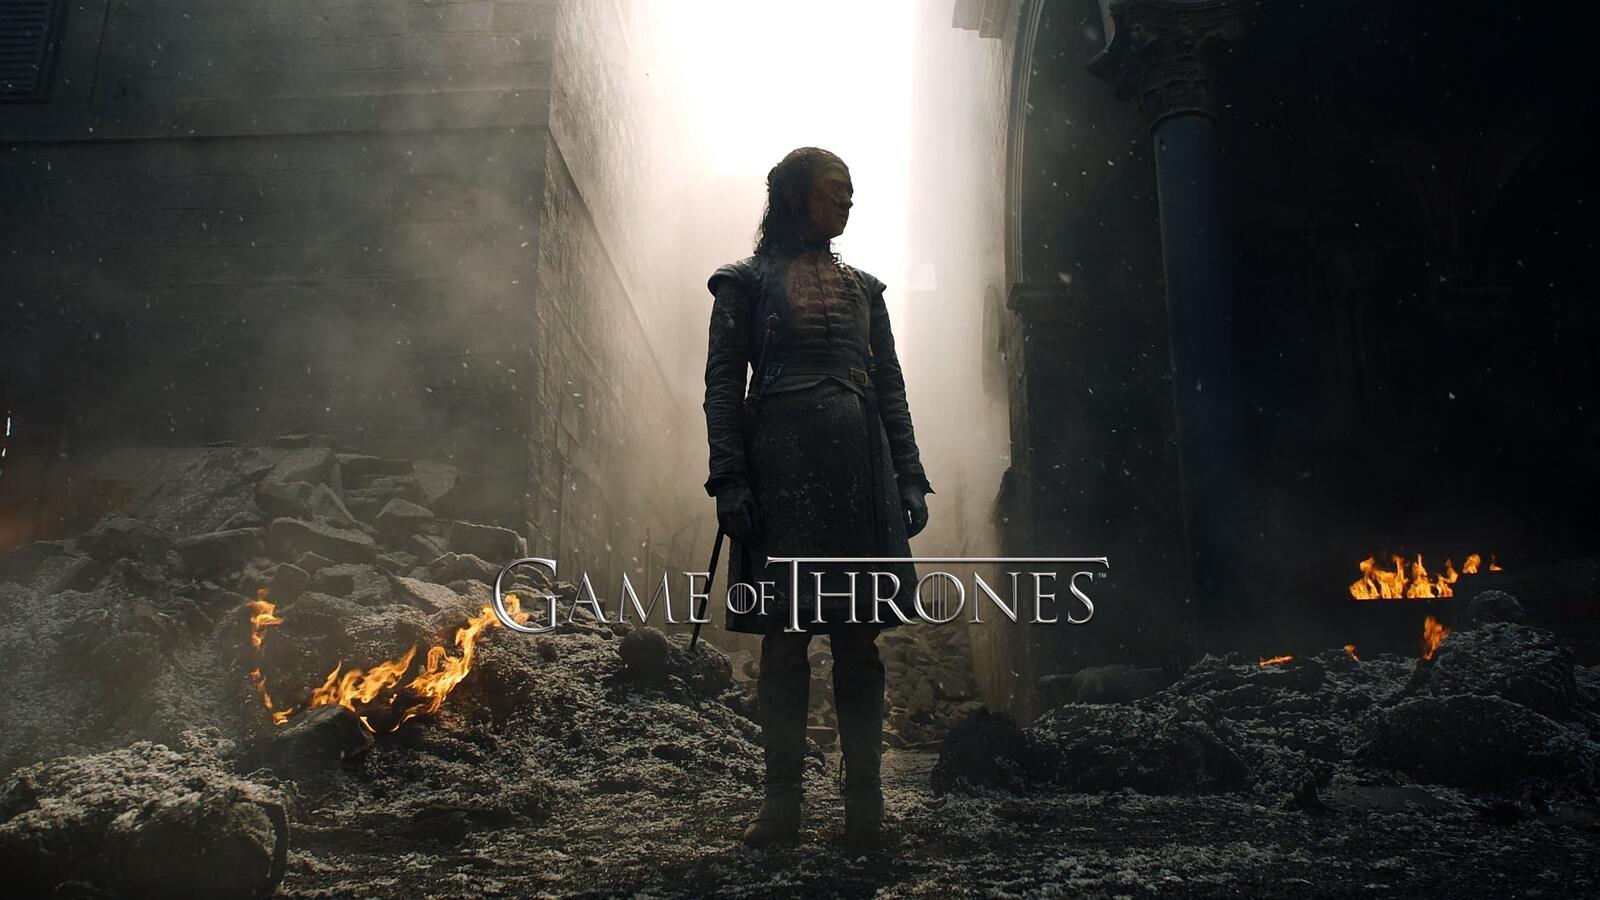 Wallpapers Game Of Thrones Arya Stark tv series on the desktop